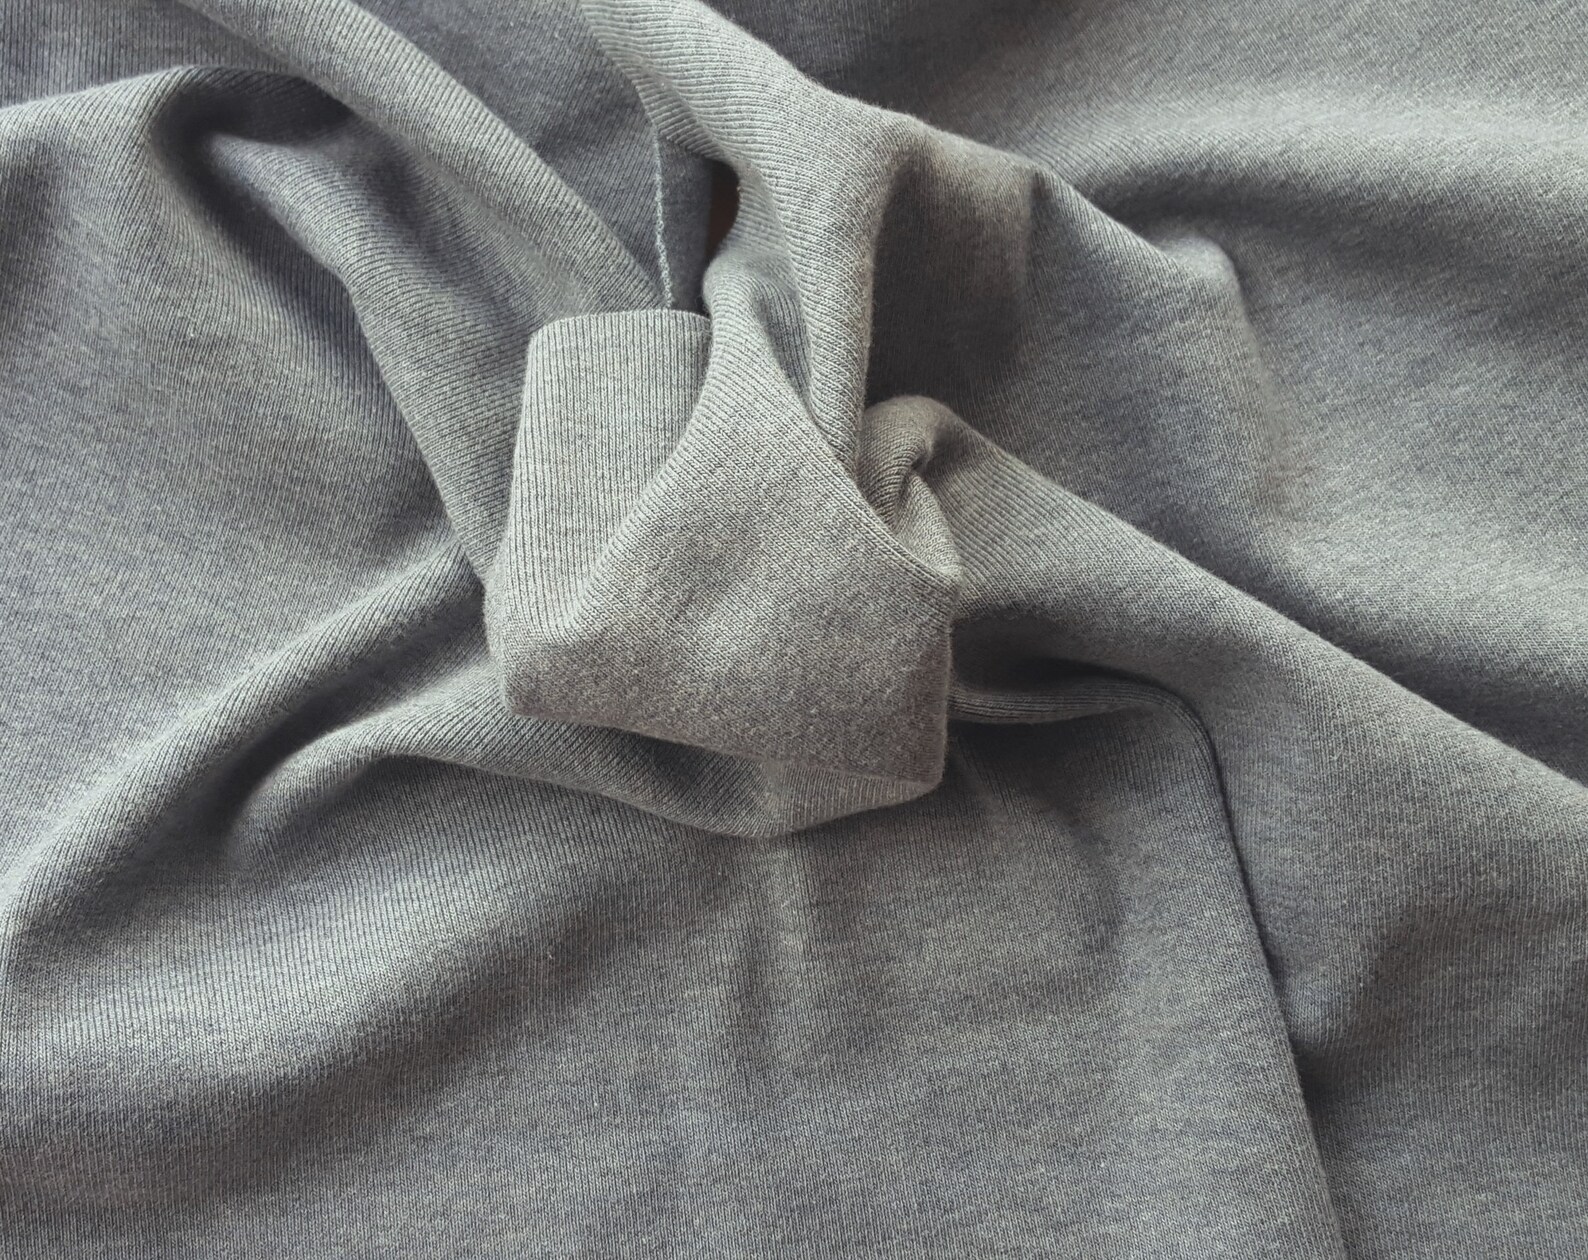 Cotton Blend 1x1 Rib Knit Fabric by The Yard Heather Gray | Etsy